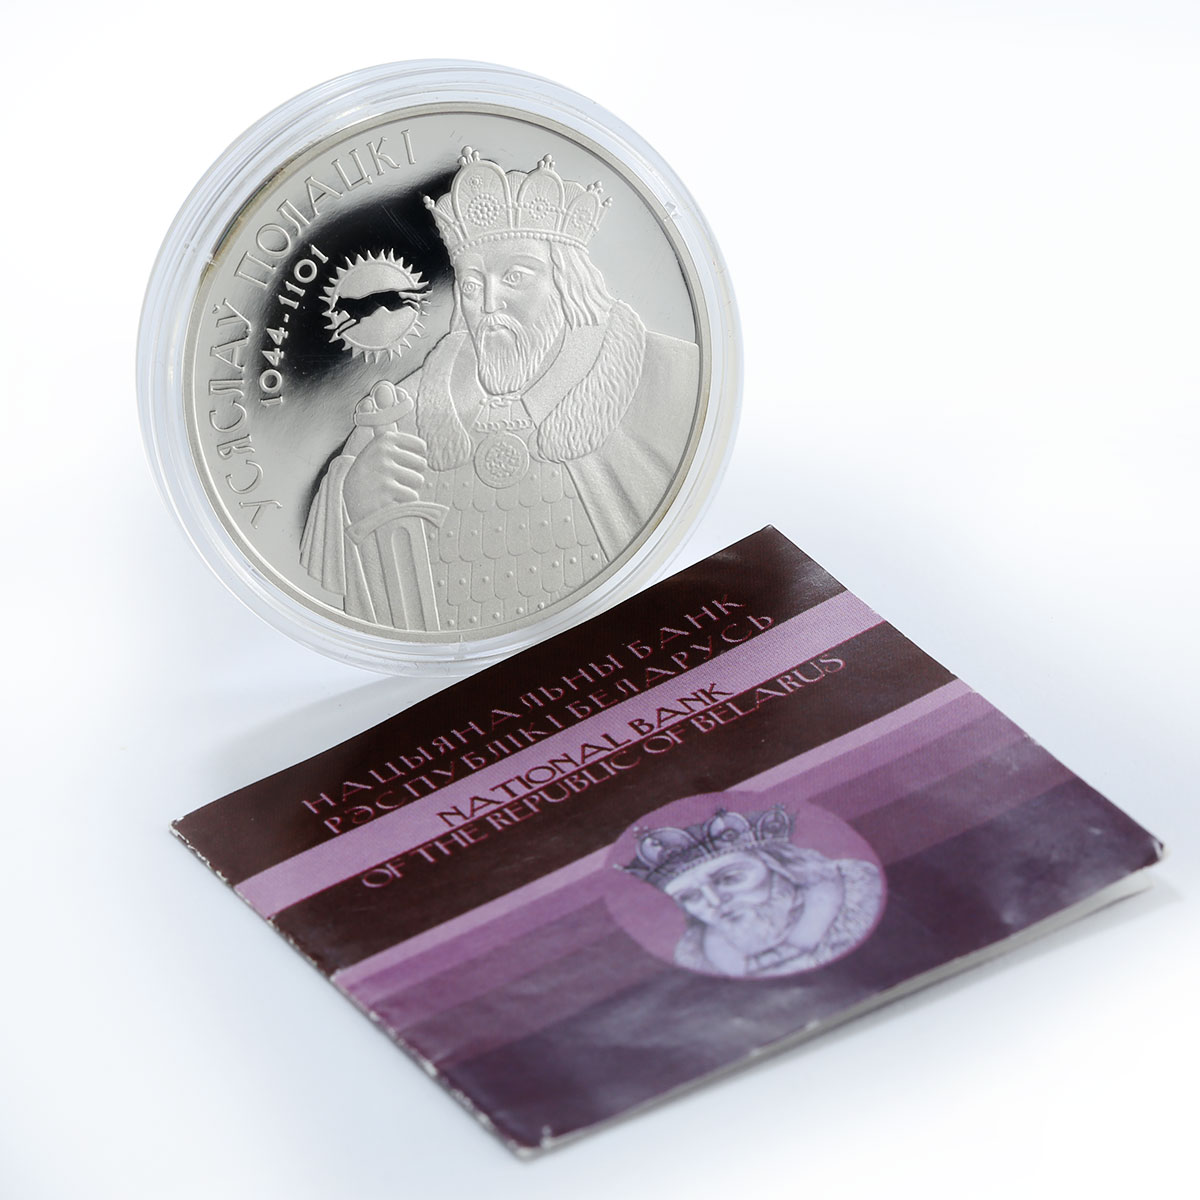 Belarus 20 rubles, Vseslav of Polotsk, silver proof coin 2005